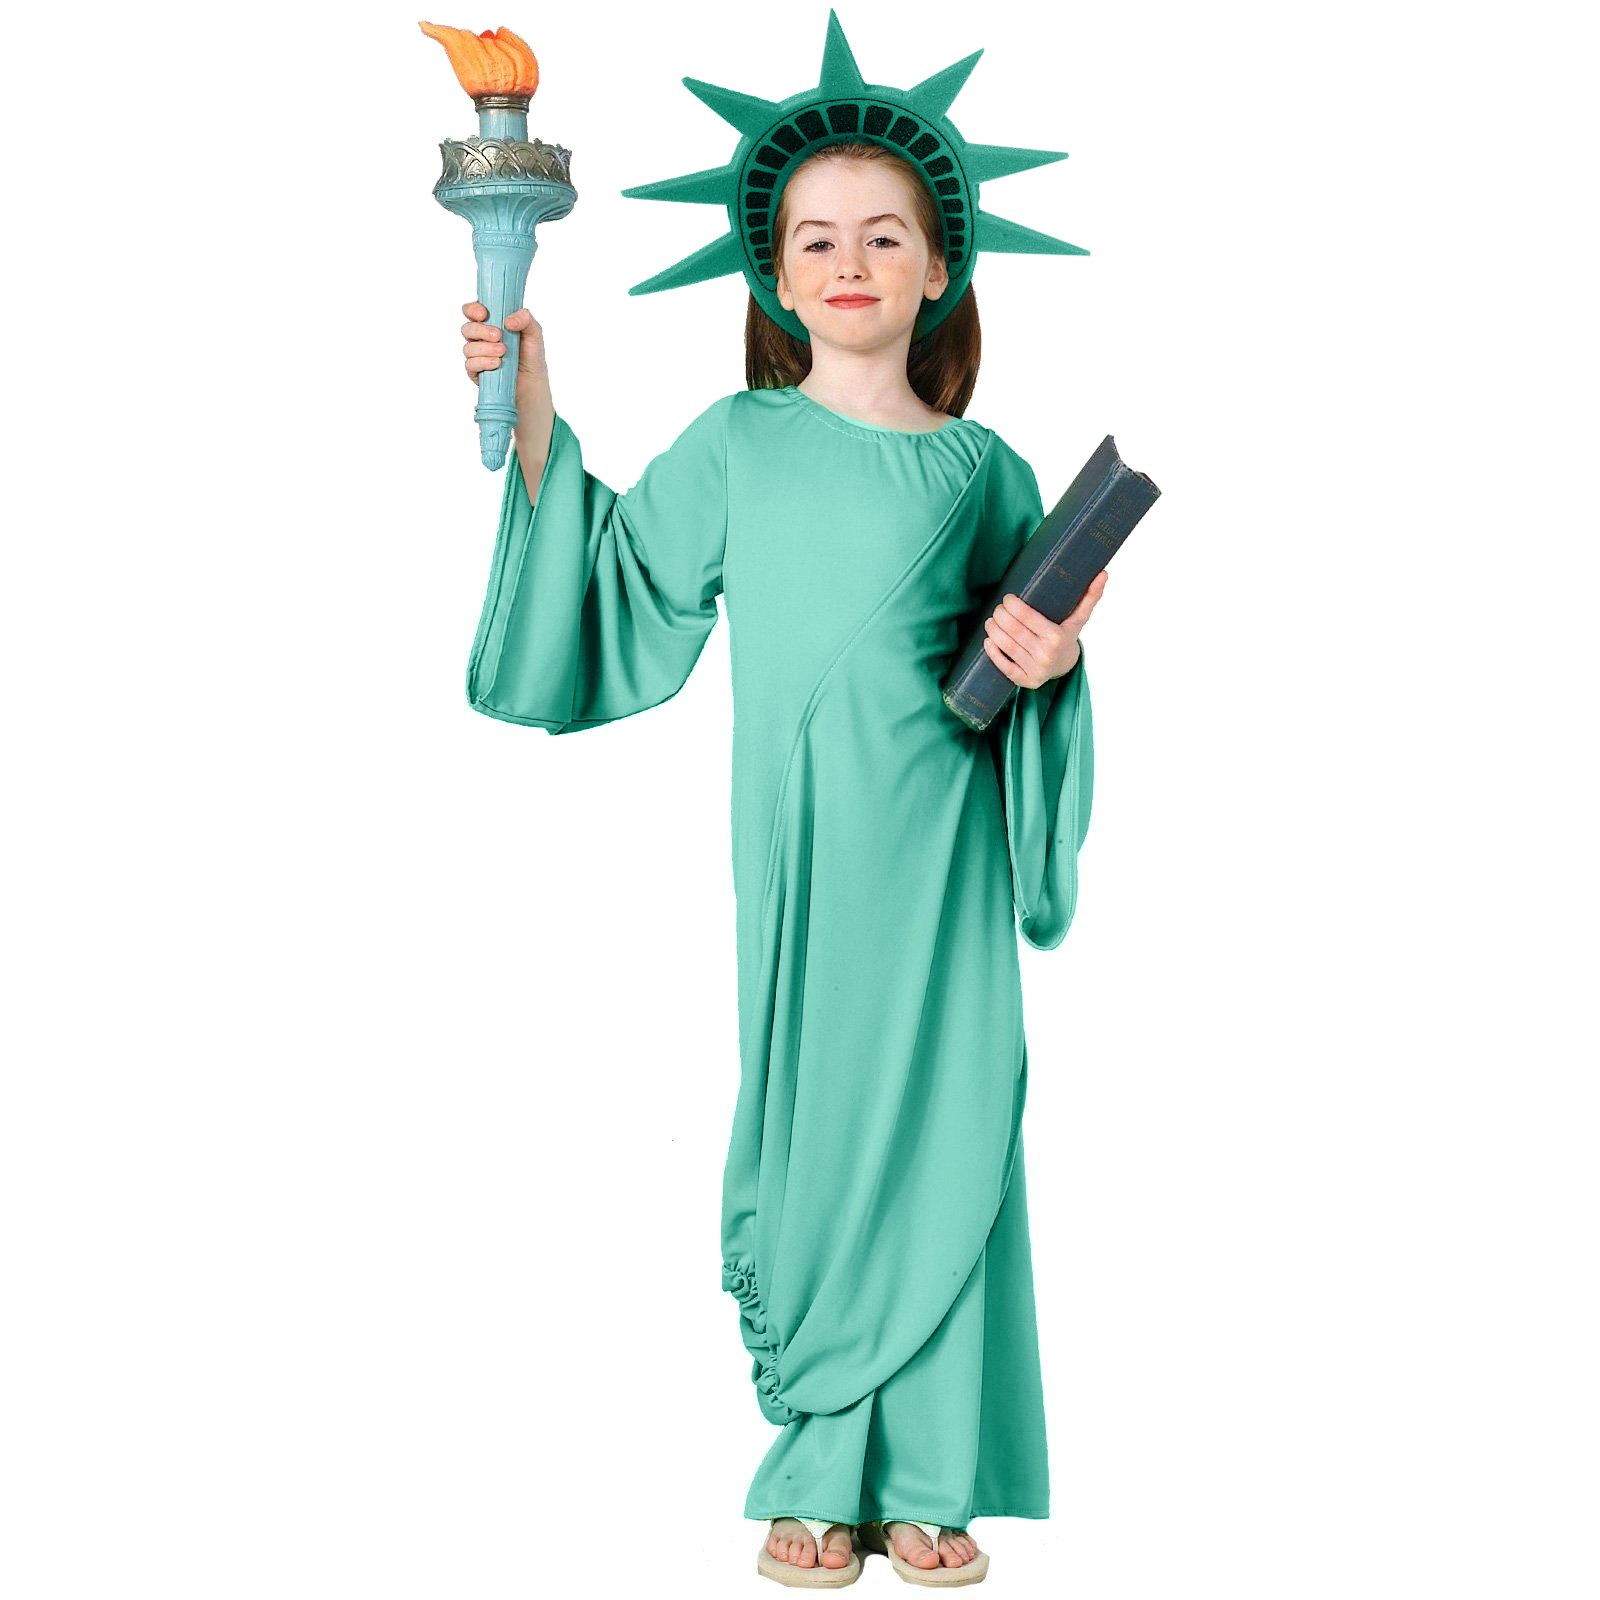 Statue of Liberty Child Costume